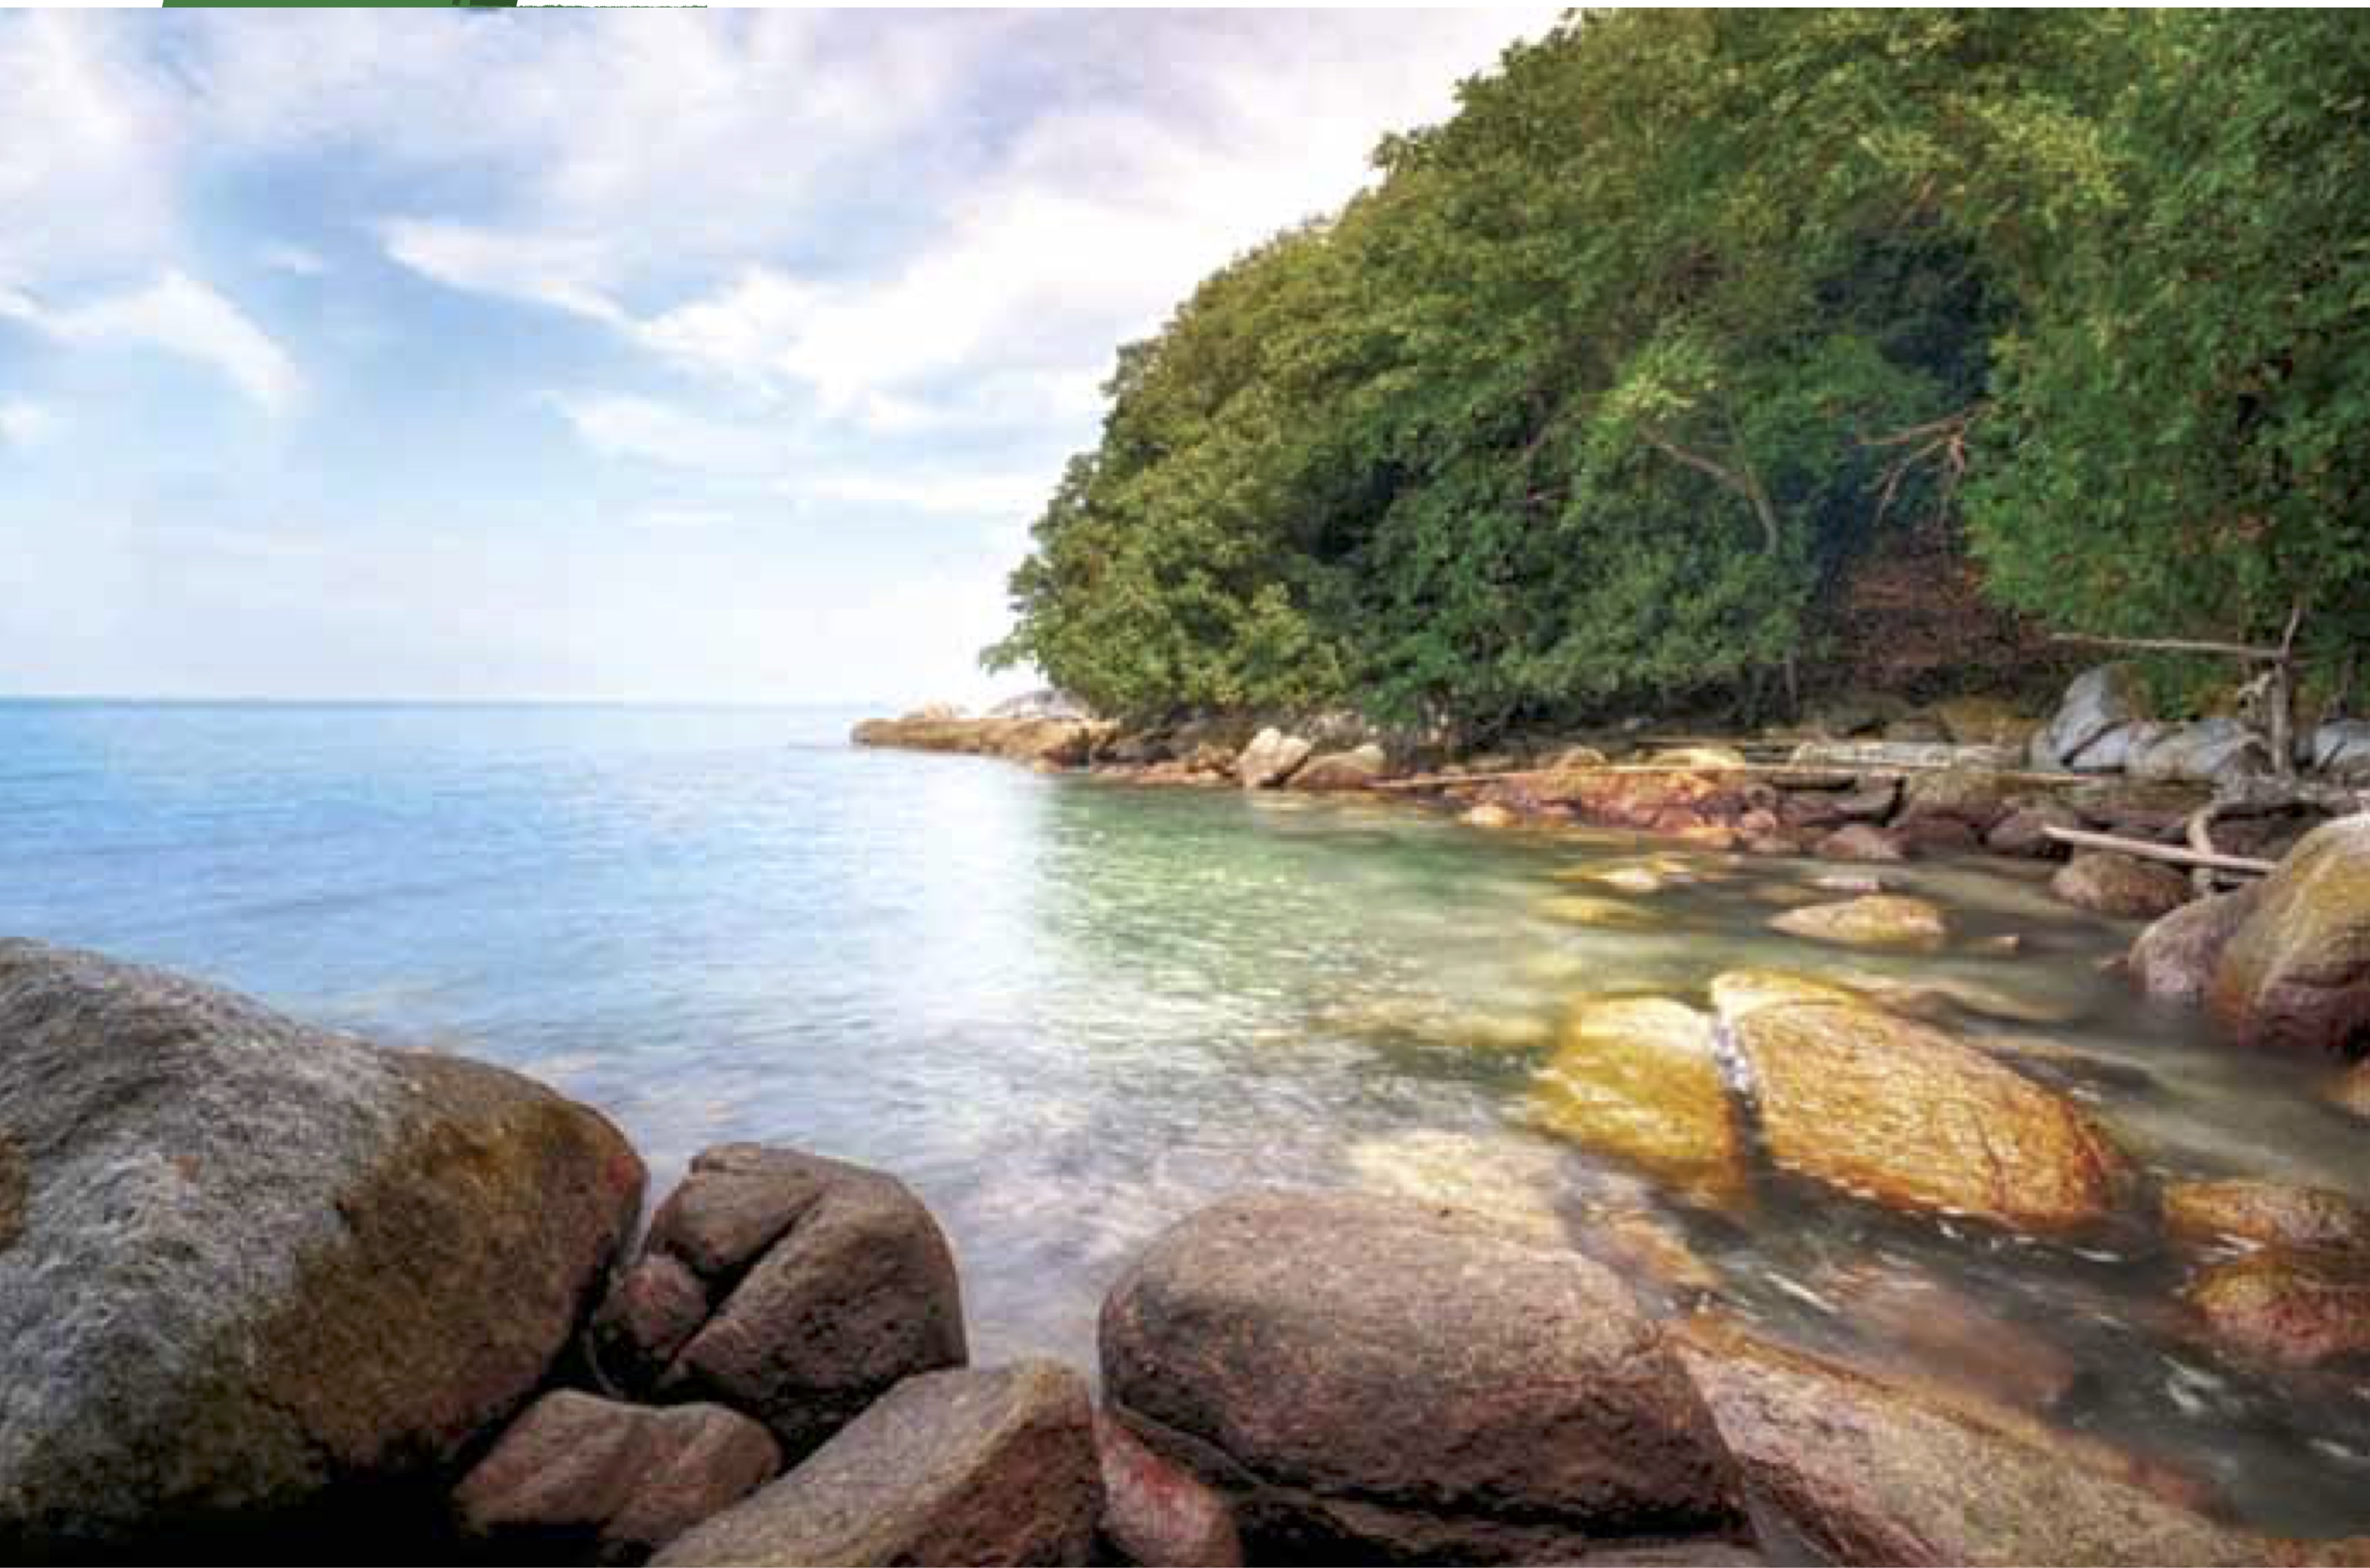 Negeri yang terletak di pantai barat semenanjung malaysia